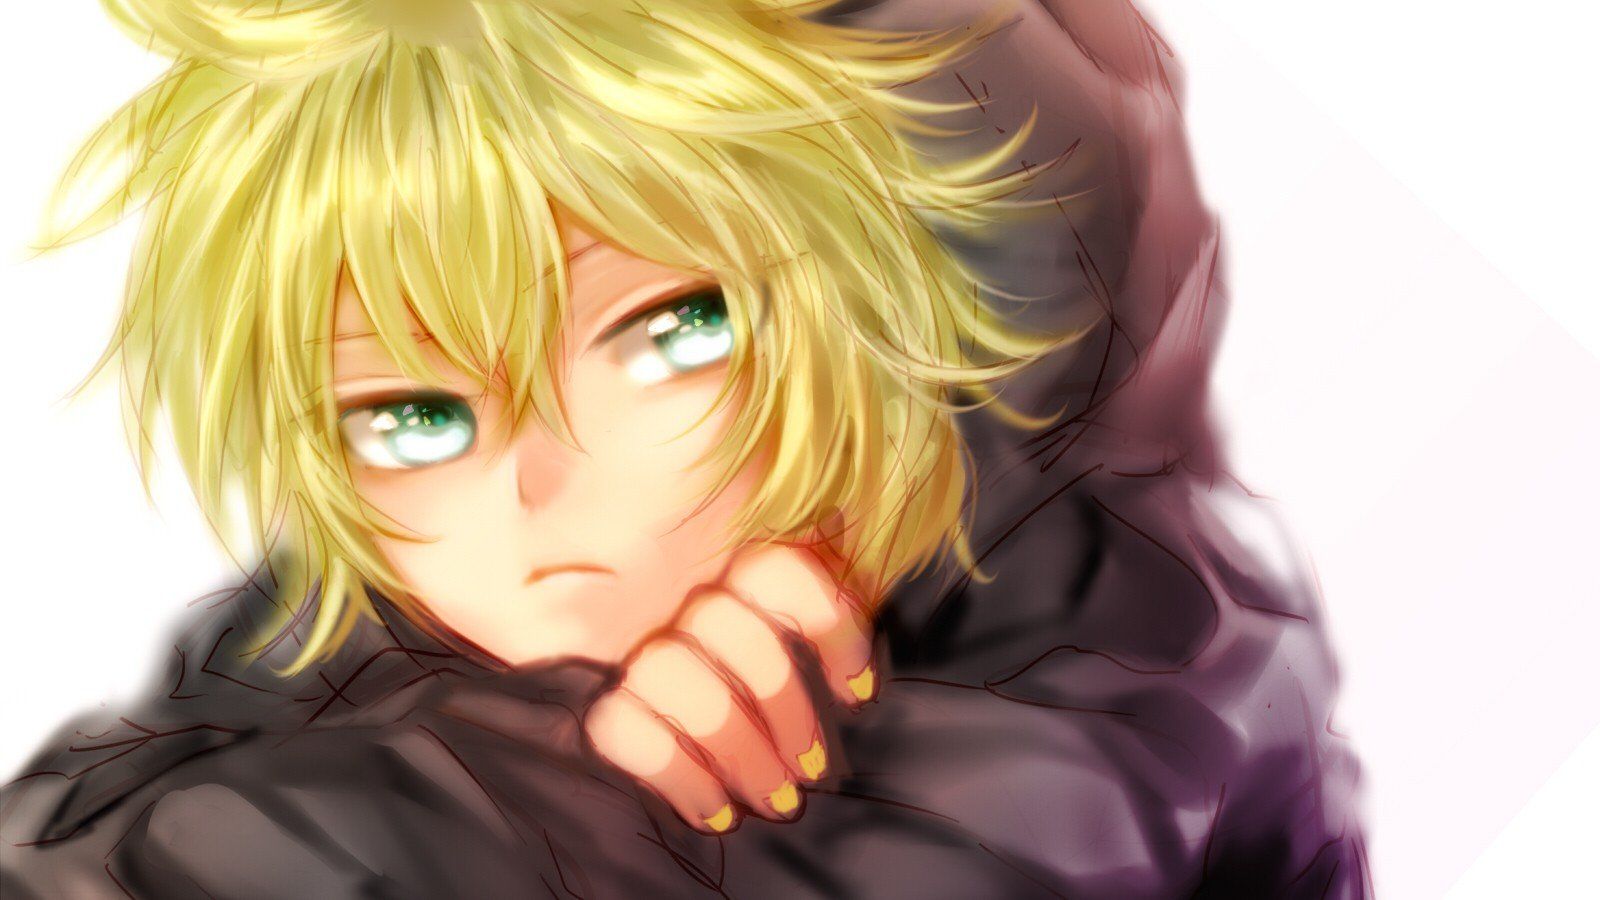 Anime Boy Blonde Hair Cartoon Character Stock Illustration 1580580982   Shutterstock